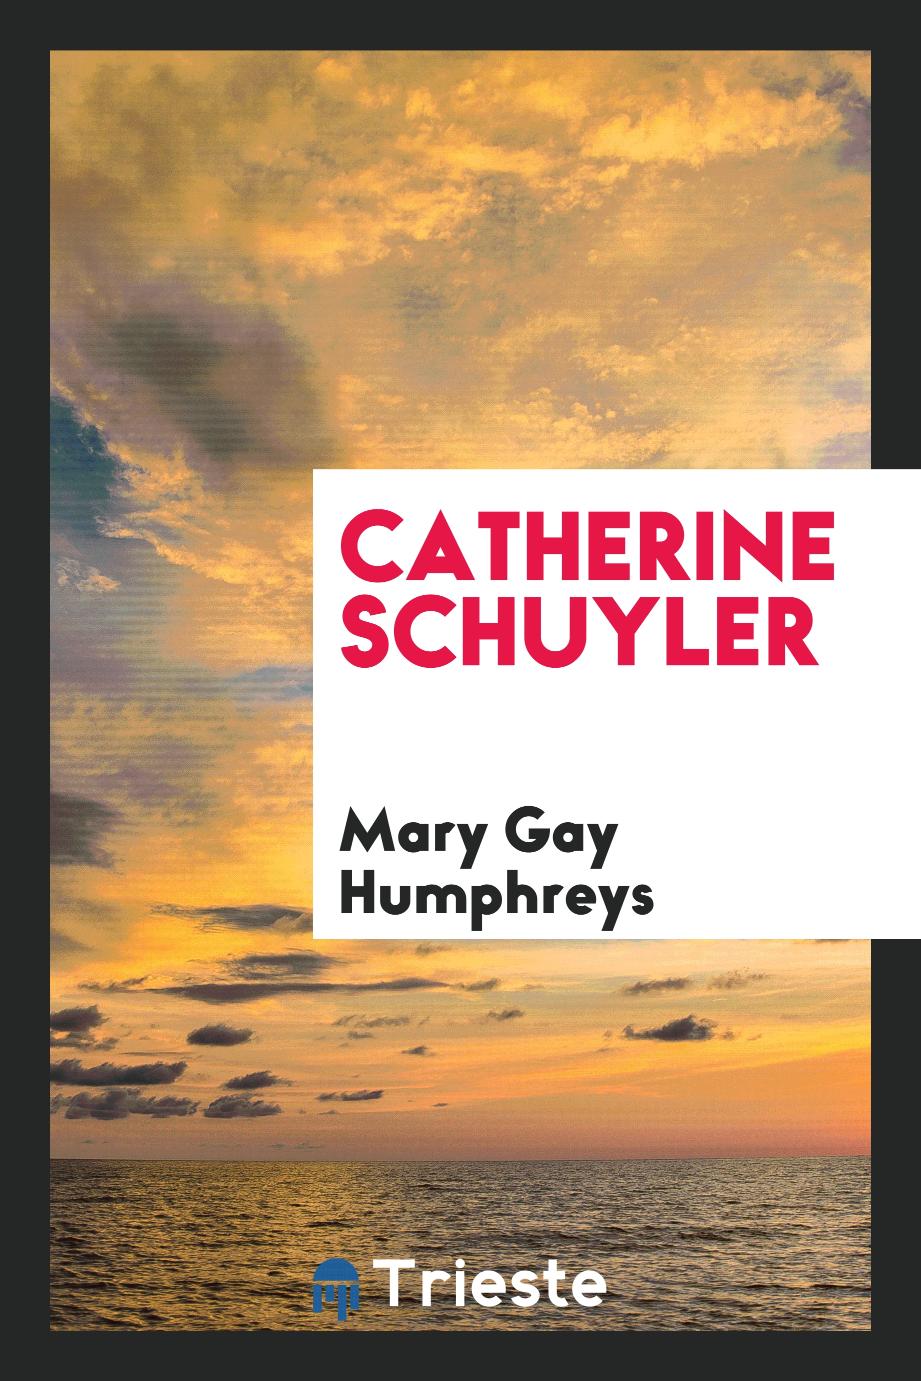 Mary Gay Humphreys - Catherine Schuyler